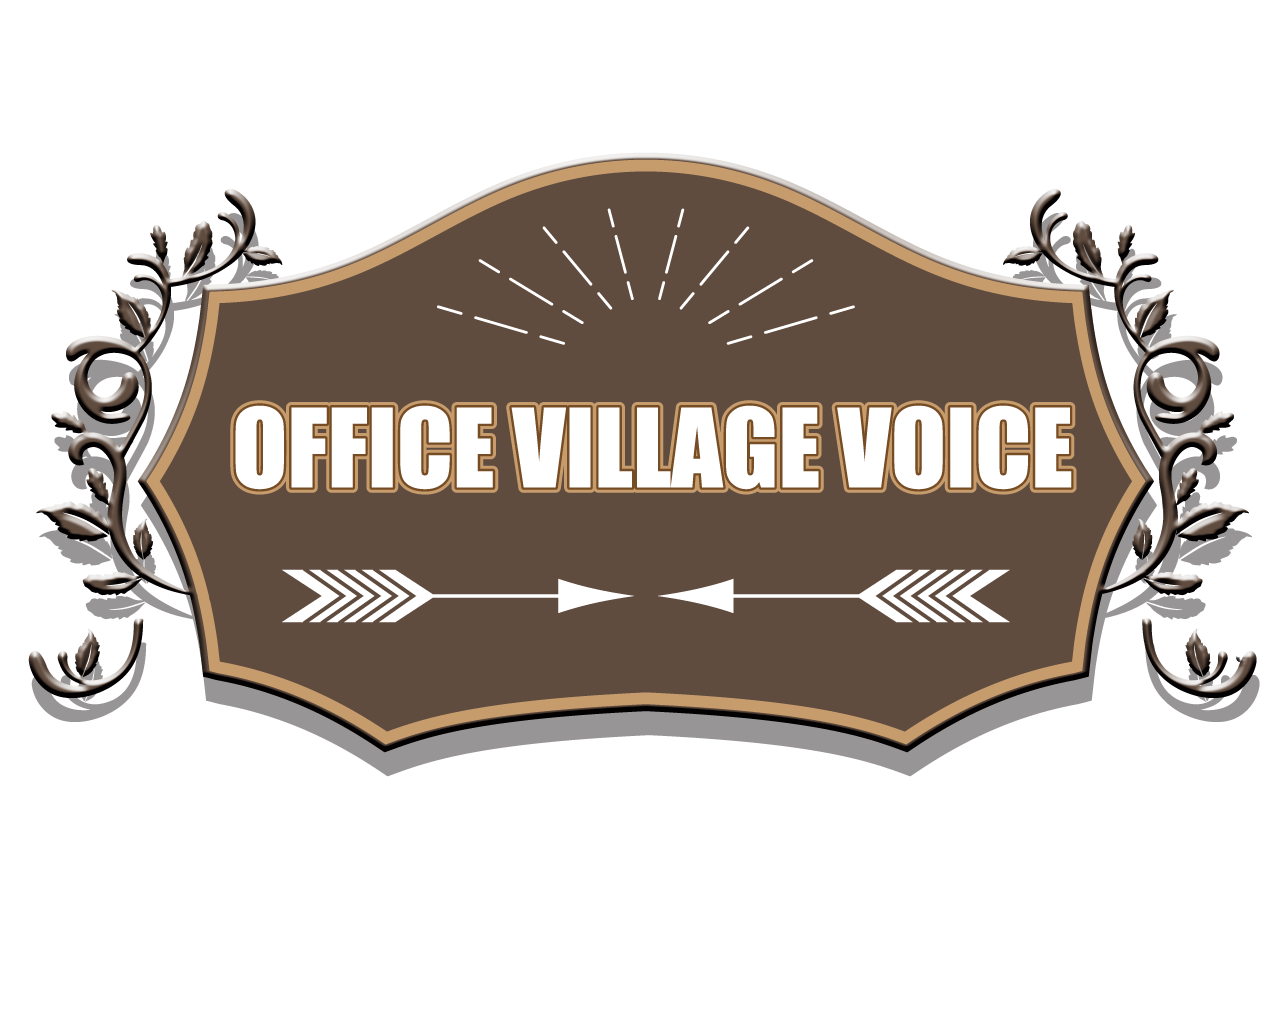 Office village voice